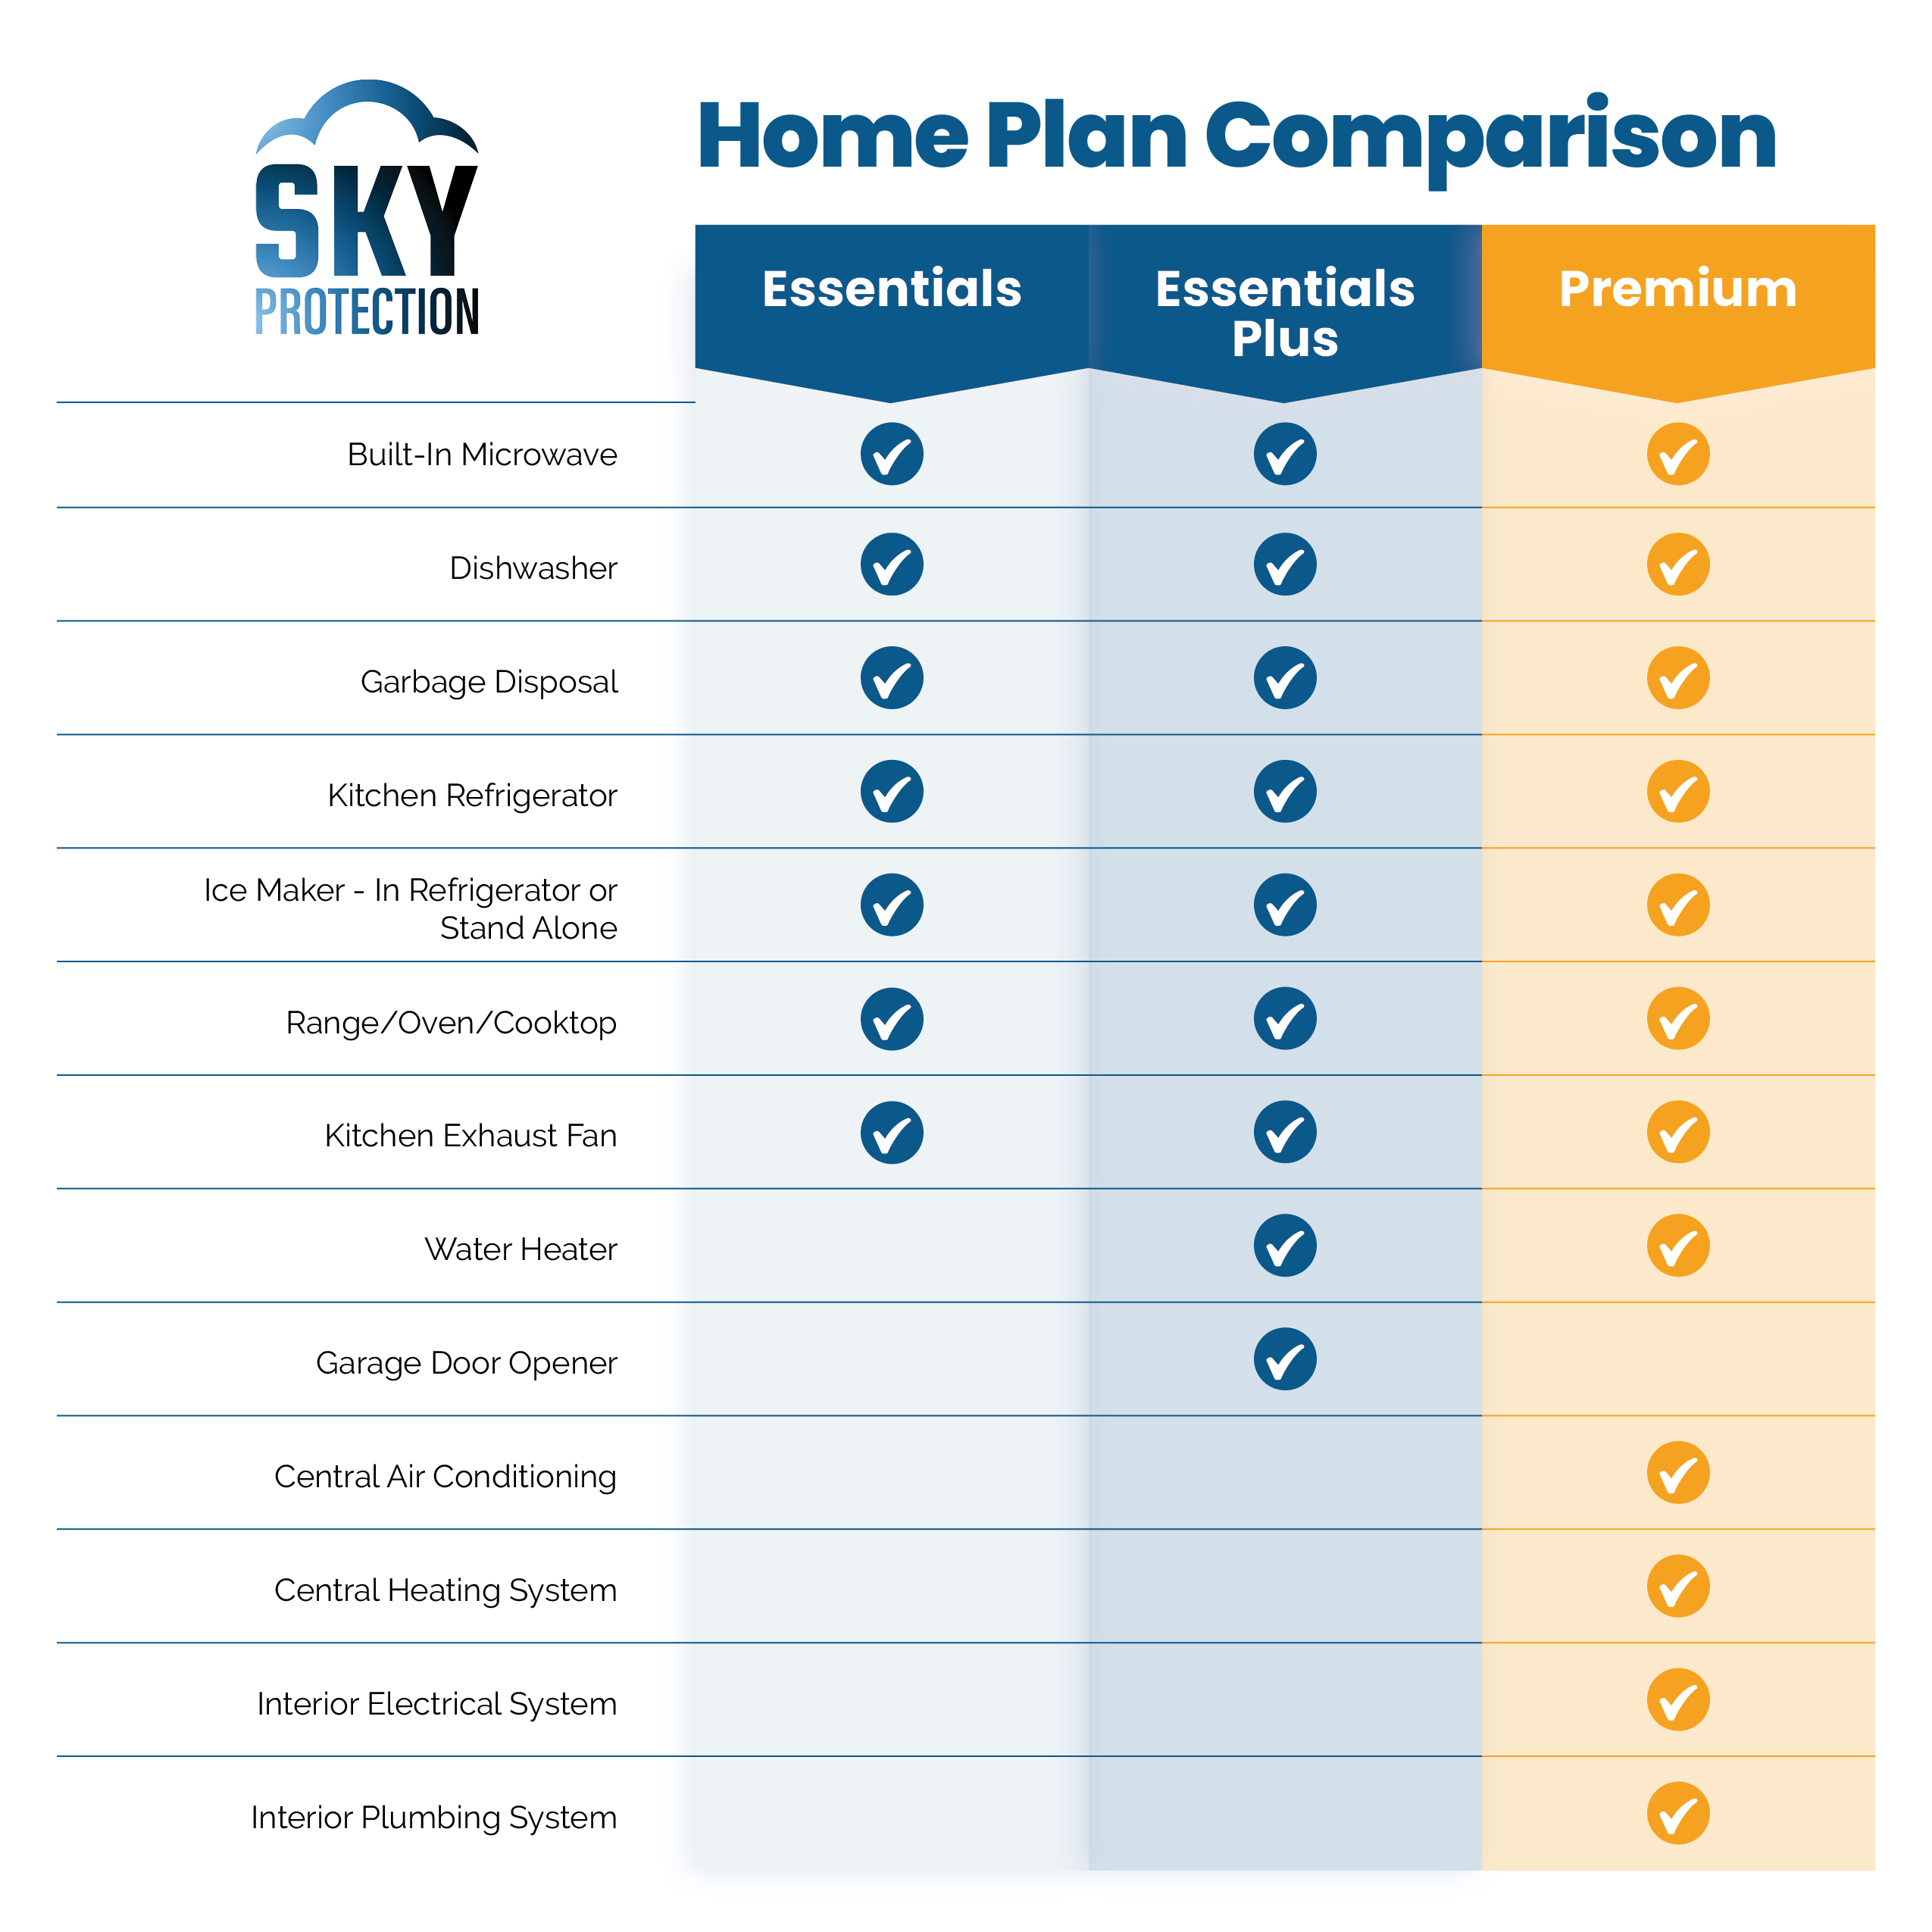 Sky Protection Home Plan Comparison